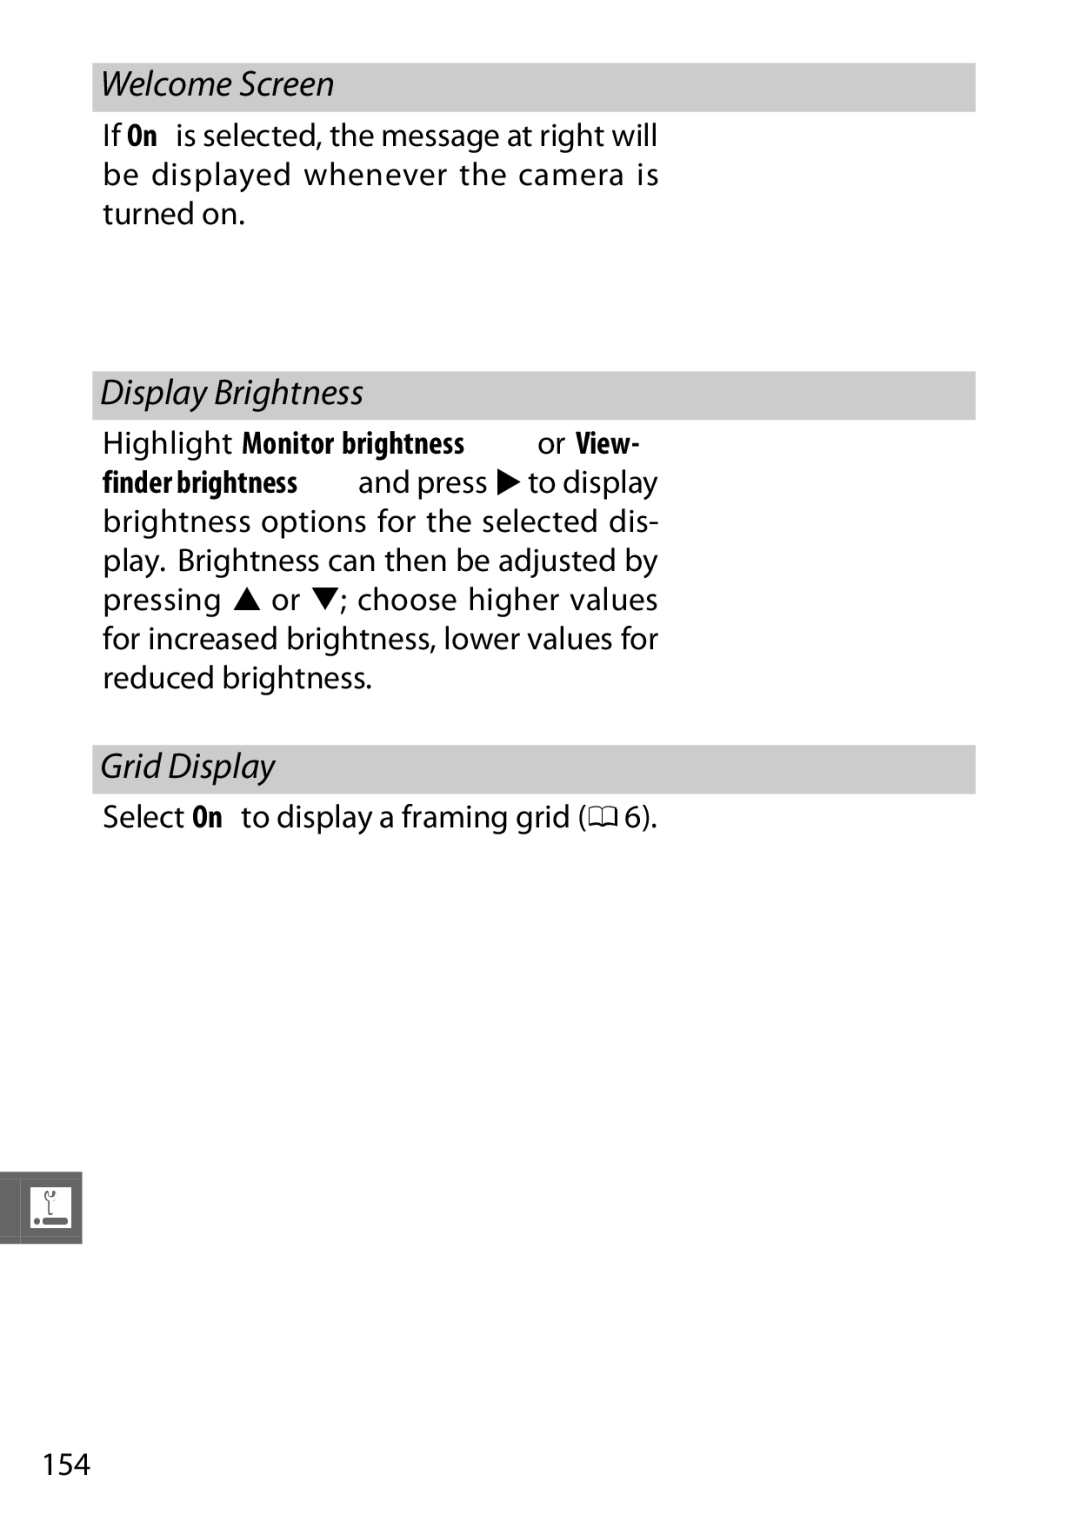 Nikon V1 manual Welcome Screen, Display Brightness, Grid Display, Select On to display a framing grid 0 154 